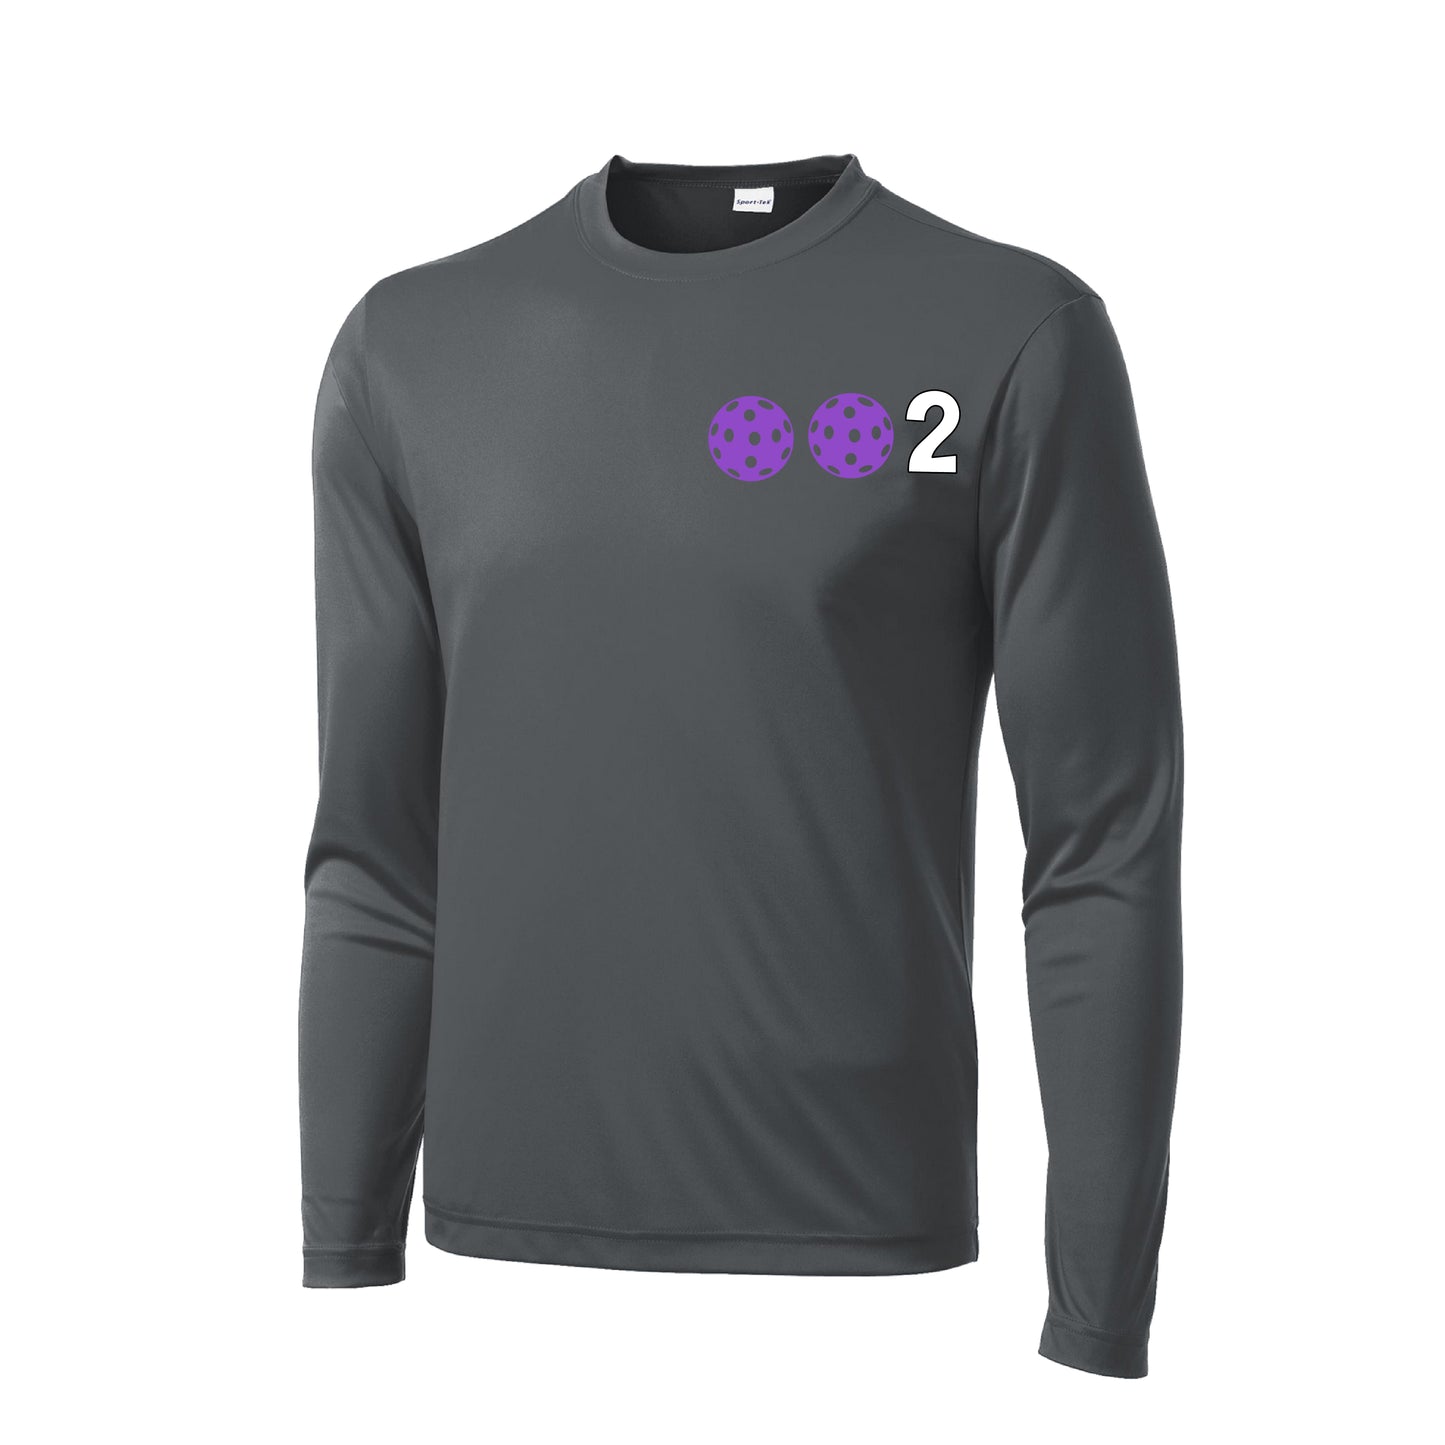 002 With Pickleballs (Cyan Purple Rainbow) Customizable | Men's Long Sleeve Athletic Shirt | 100% Polyester